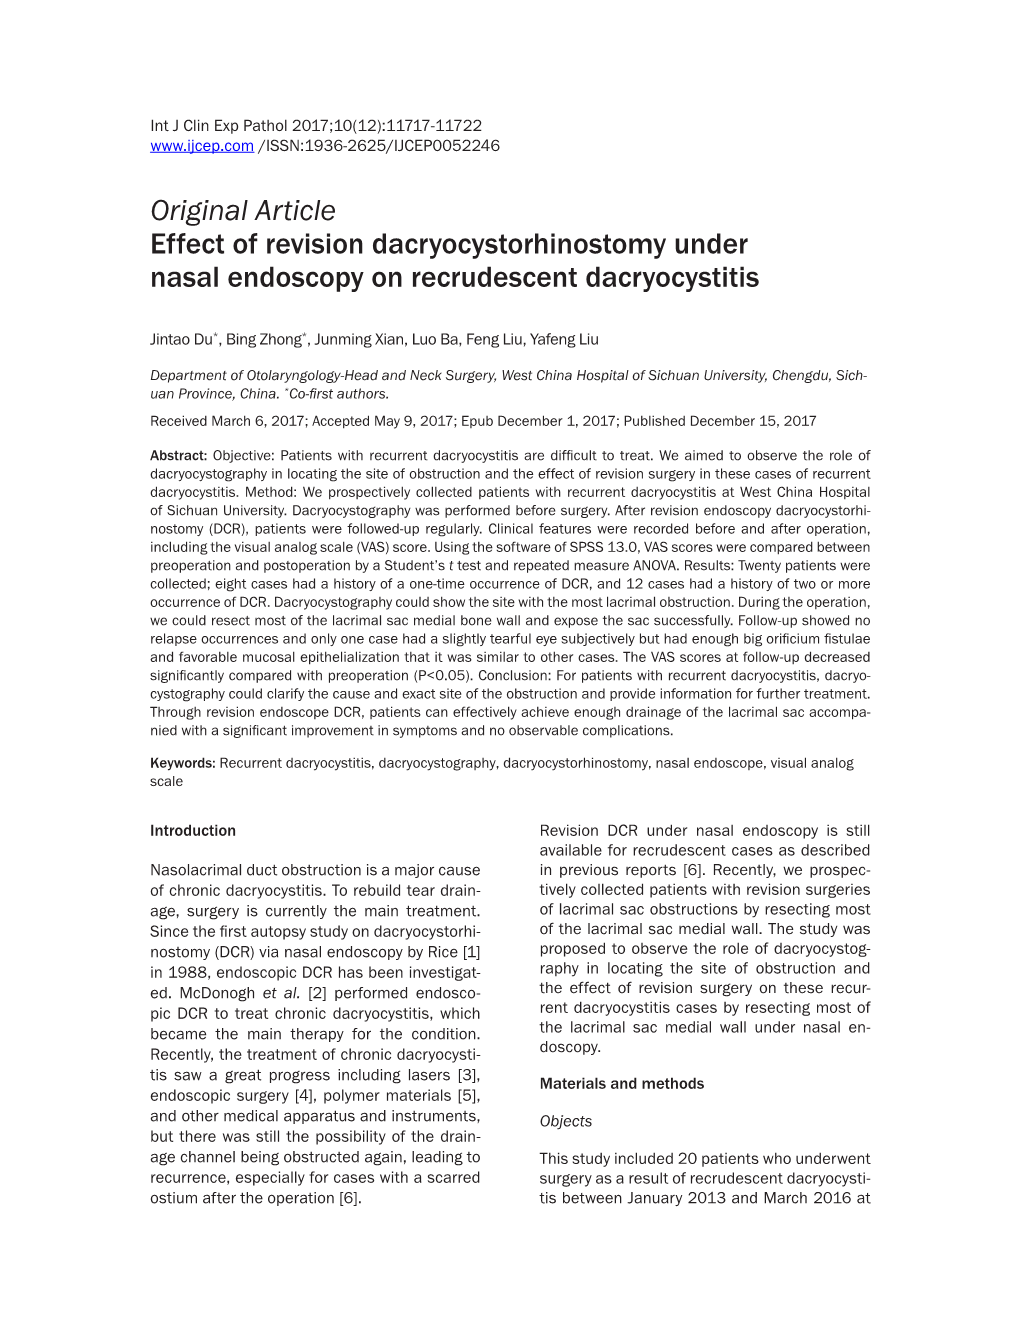 Original Article Effect of Revision Dacryocystorhinostomy Under Nasal Endoscopy on Recrudescent Dacryocystitis